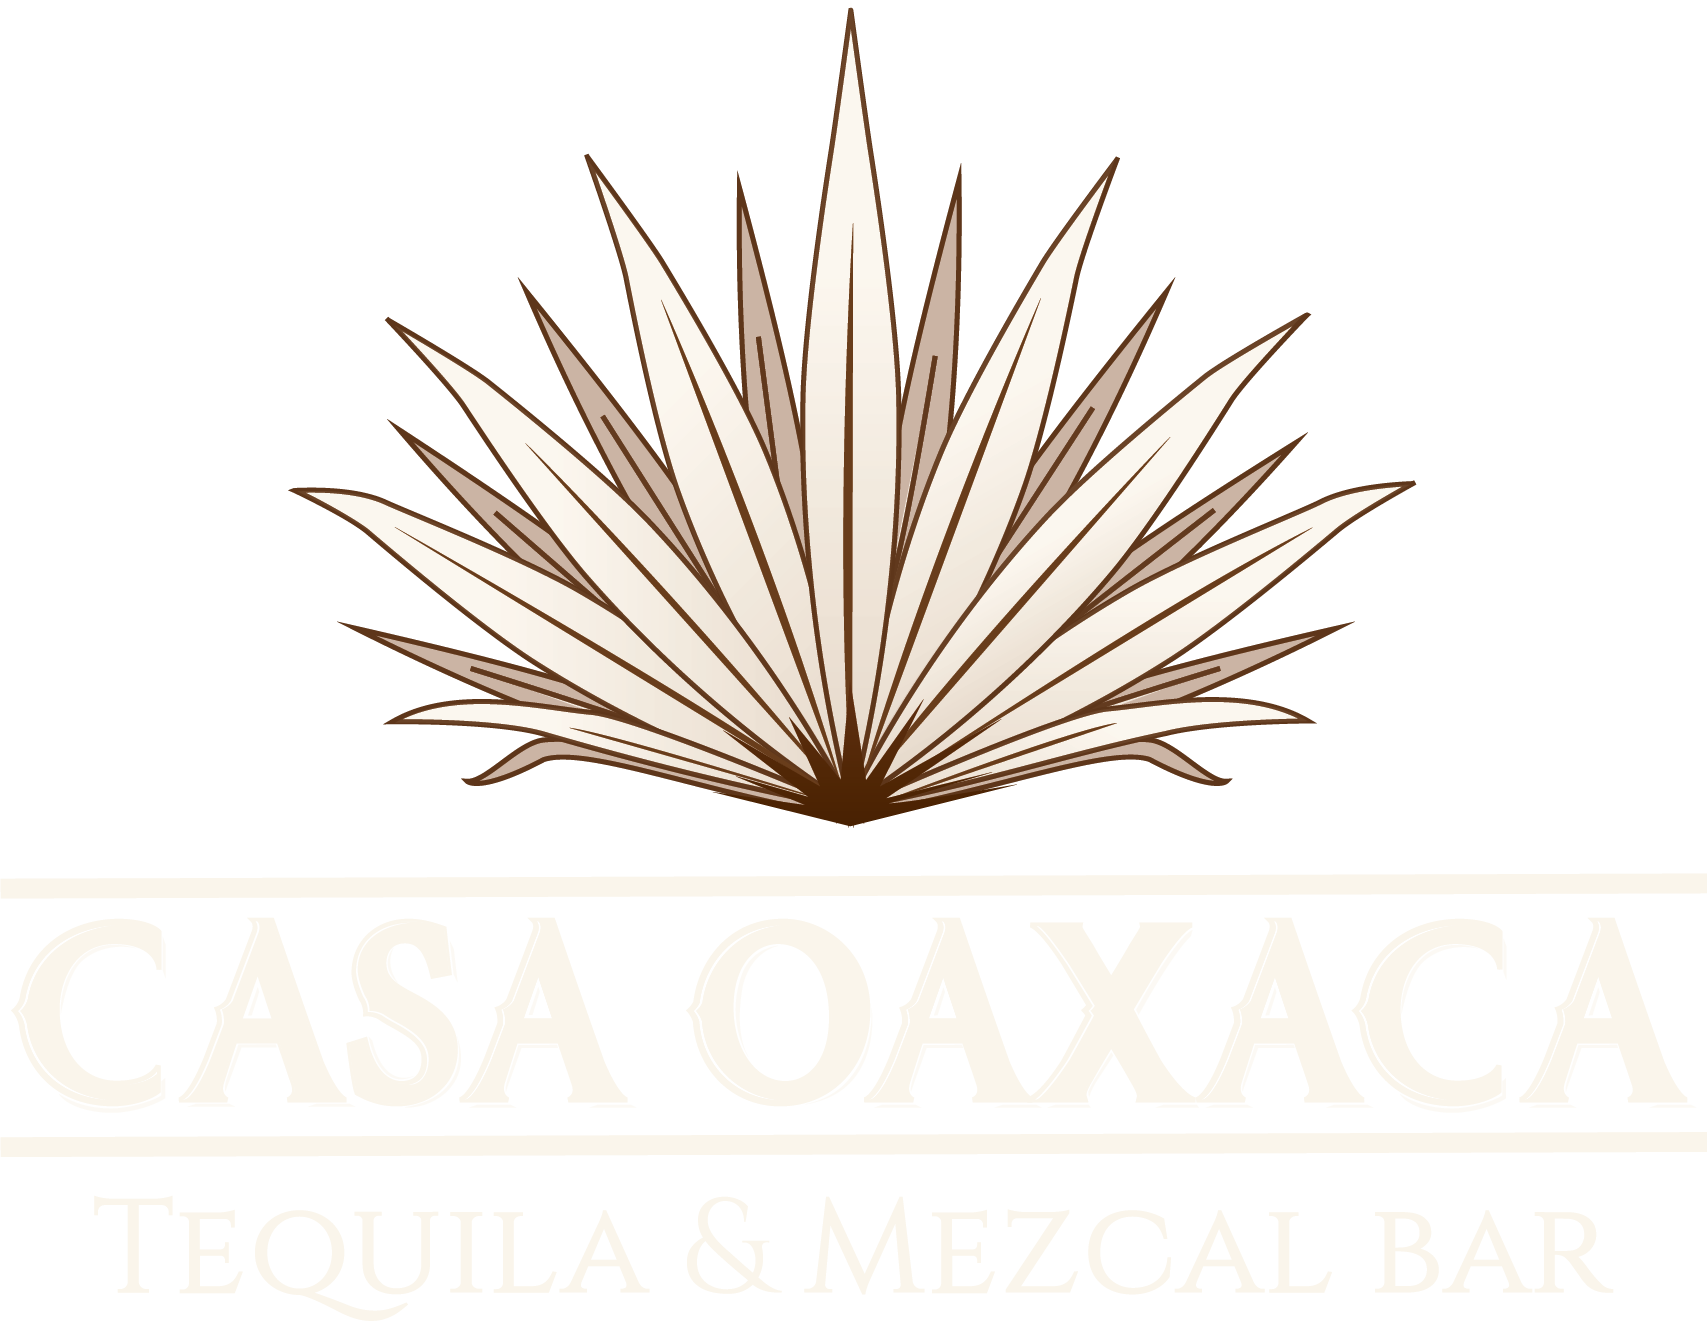 Casa Oaxaca